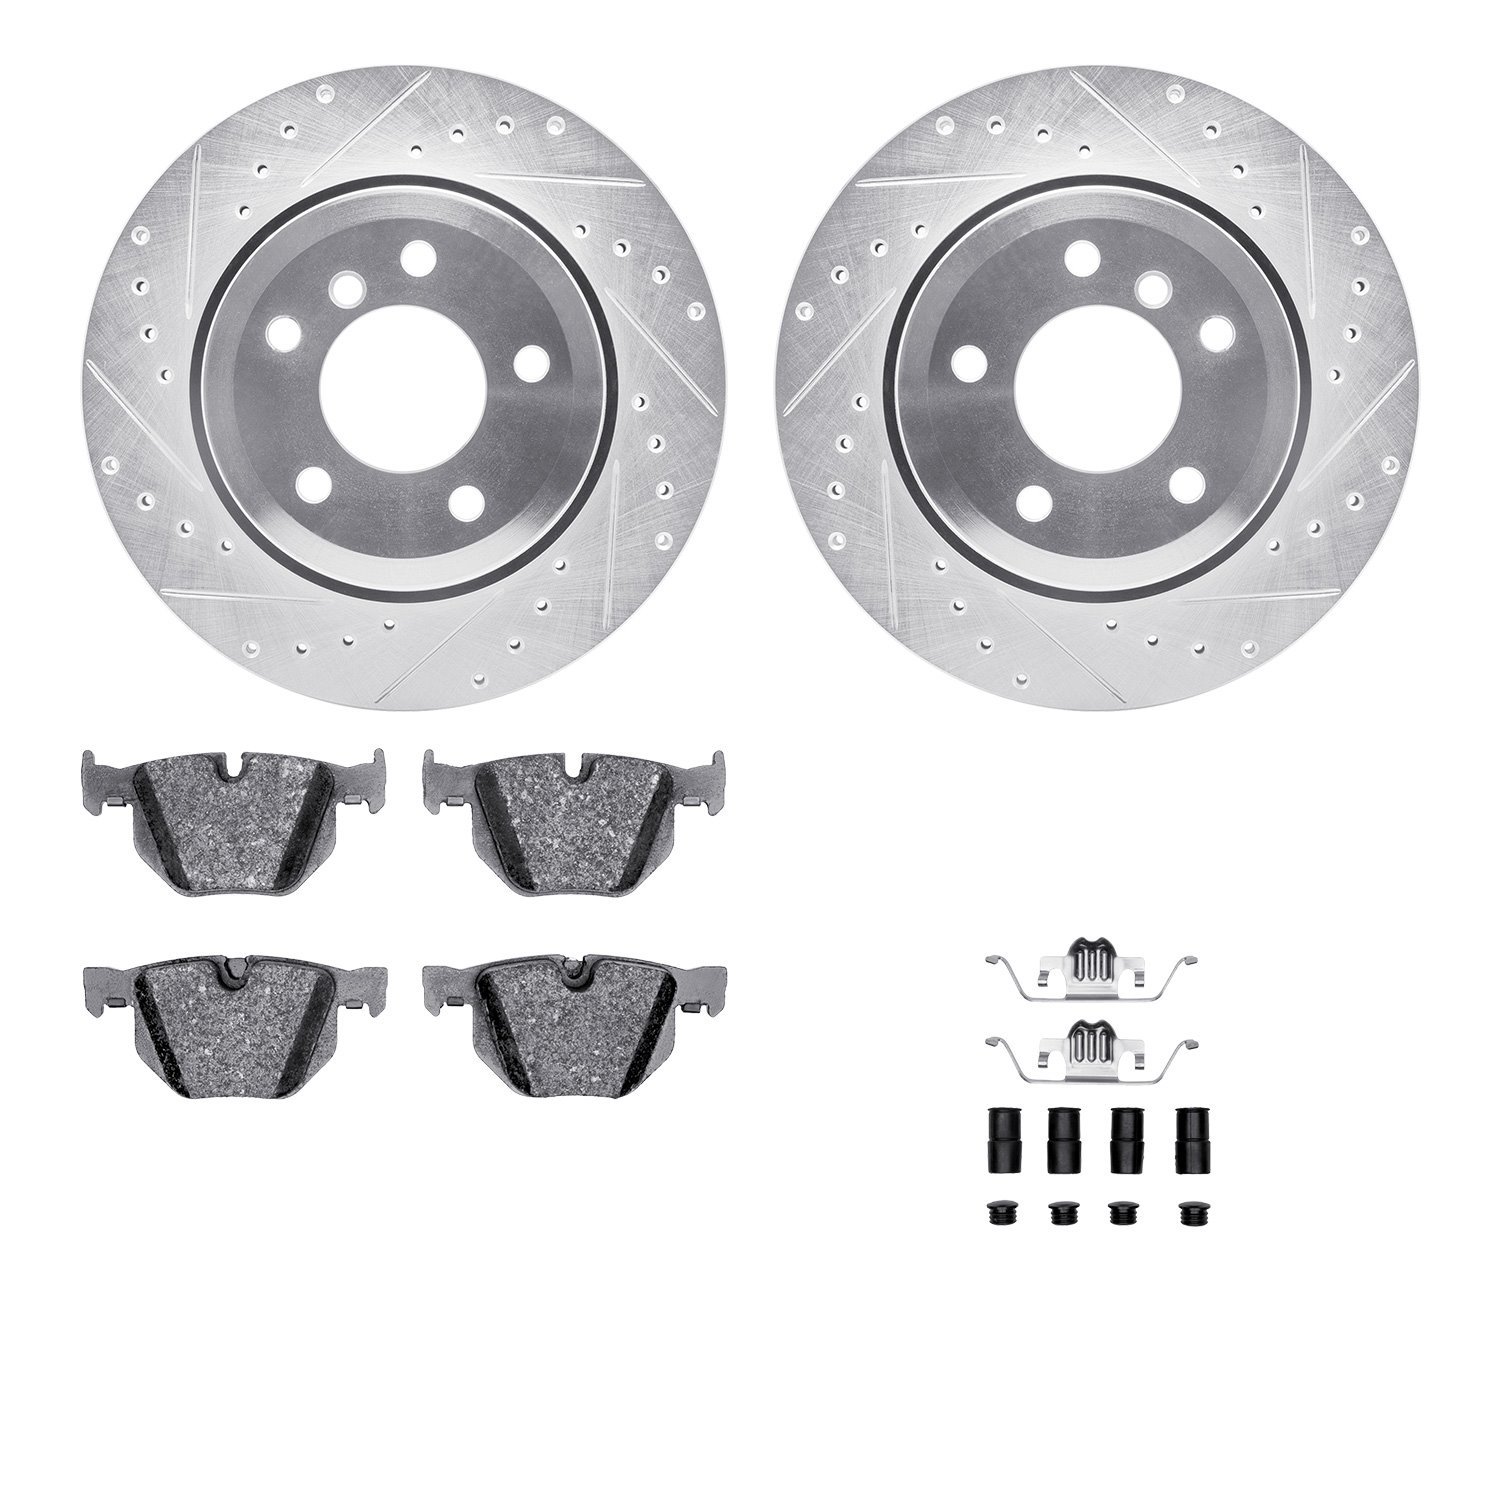 7612-31068 Drilled/Slotted Brake Rotors w/5000 Euro Ceramic Brake Pads Kit & Hardware [Silver], 2006-2010 BMW, Position: Rear